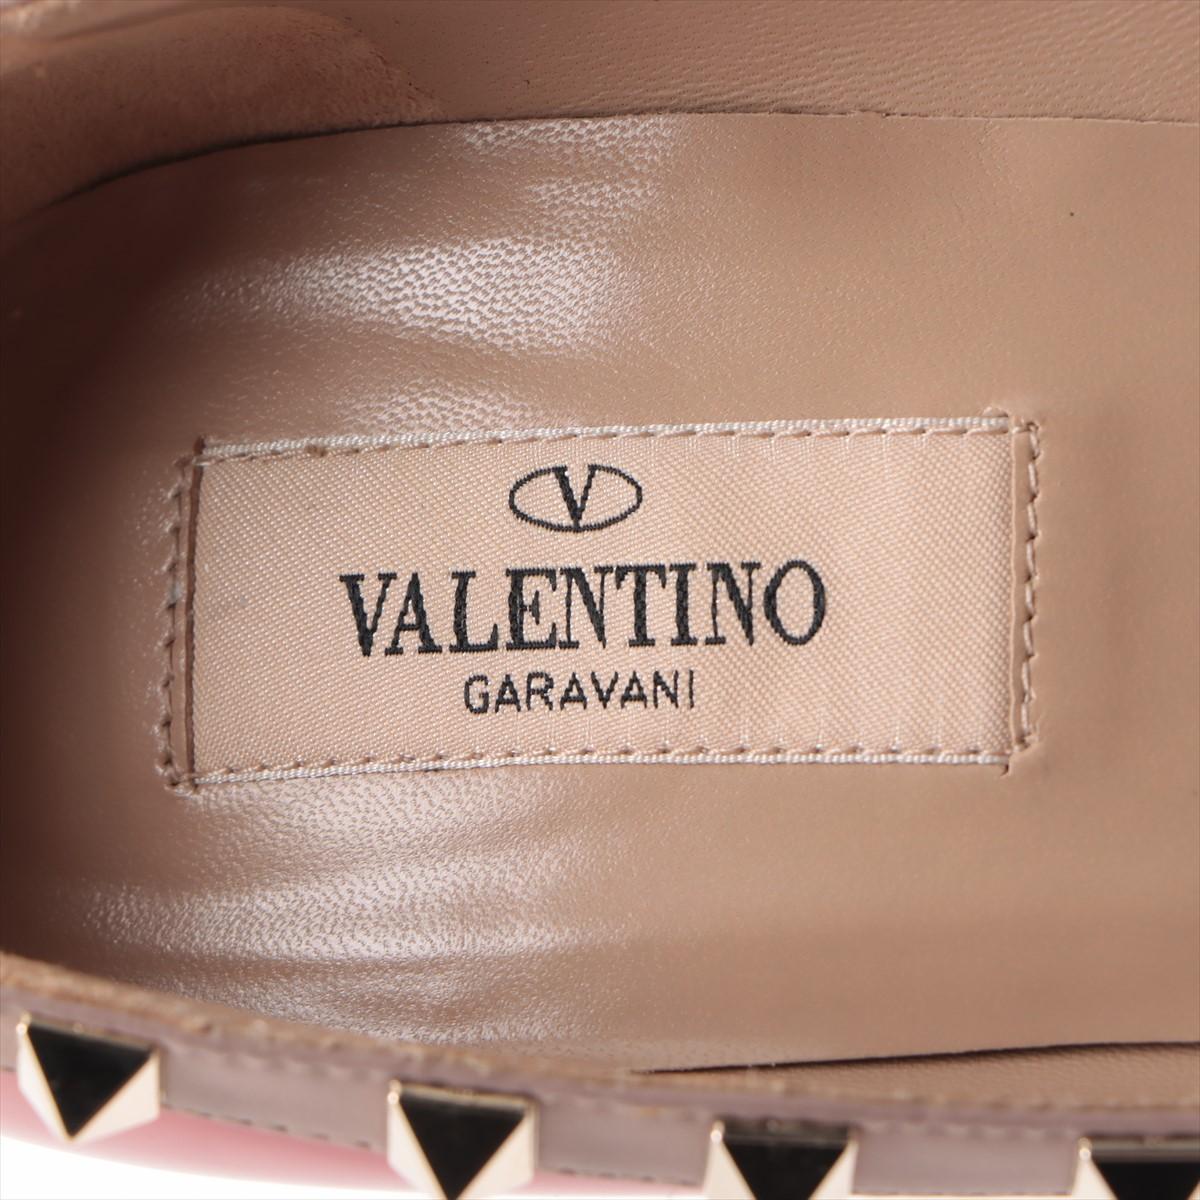 Valentino Garavani Rockstud Pointed-toe Patent Leather Pump Red 5